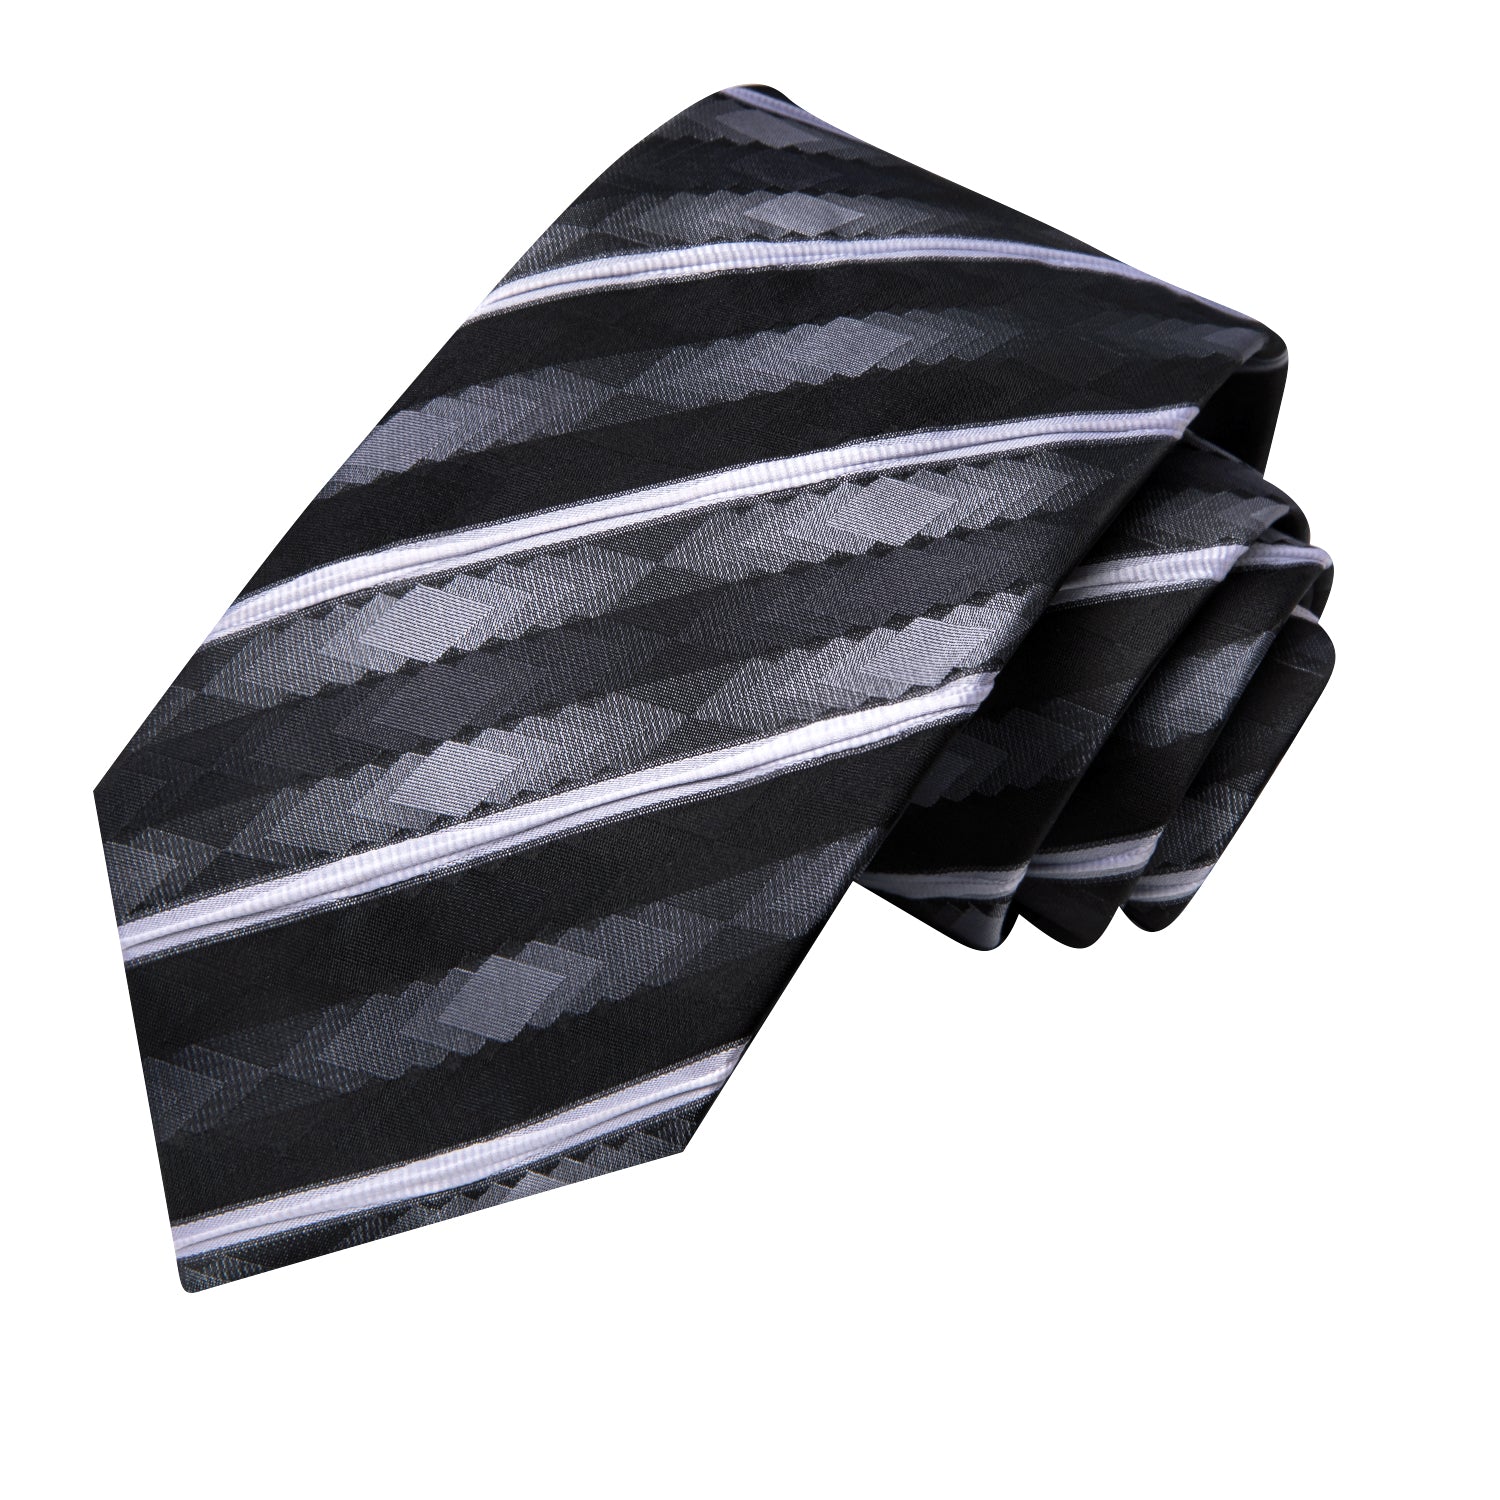 Hi-Tie White Black Striped Novelty Men's Tie Pocket Square Cufflinks Set